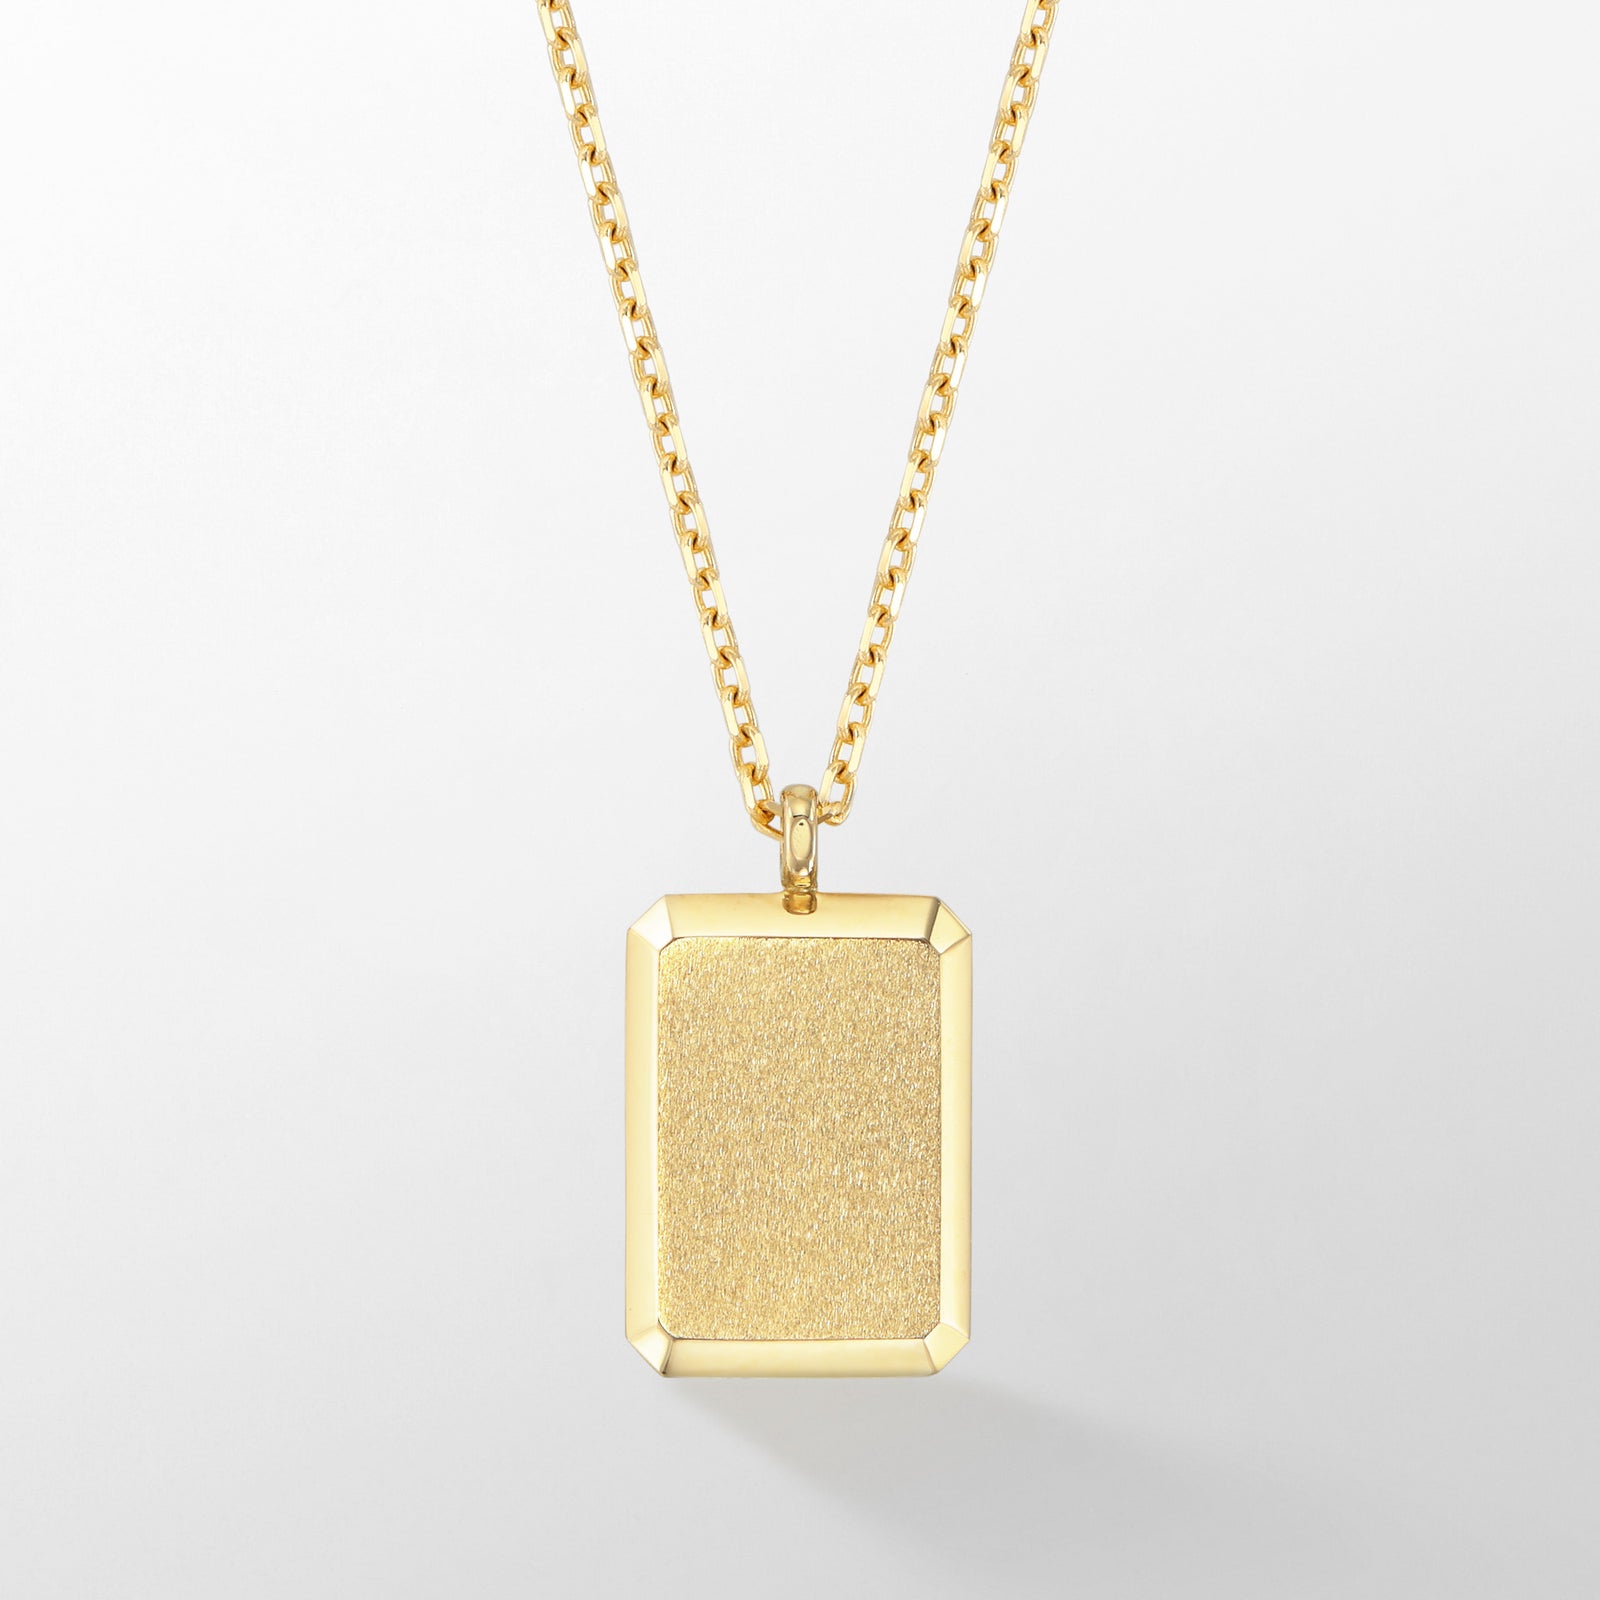 K14 ダイヤ ペンダントネックレス mado-pendant1 K18 Yellow Gold